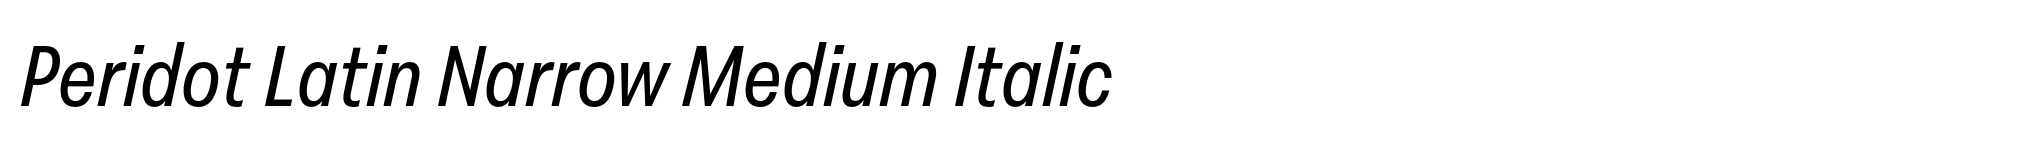 Peridot Latin Narrow Medium Italic image